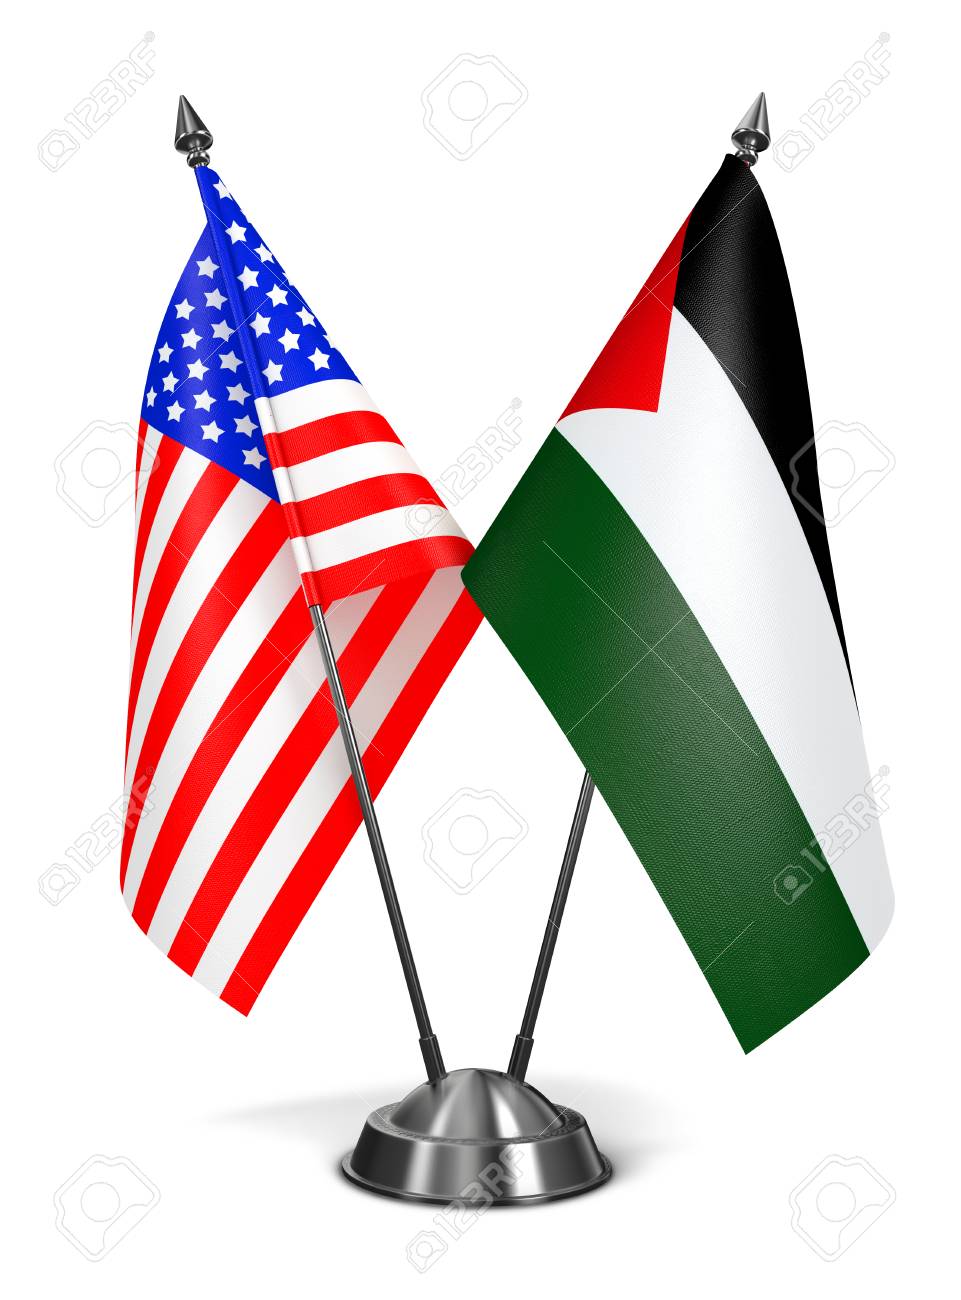 Image result for palestine usa